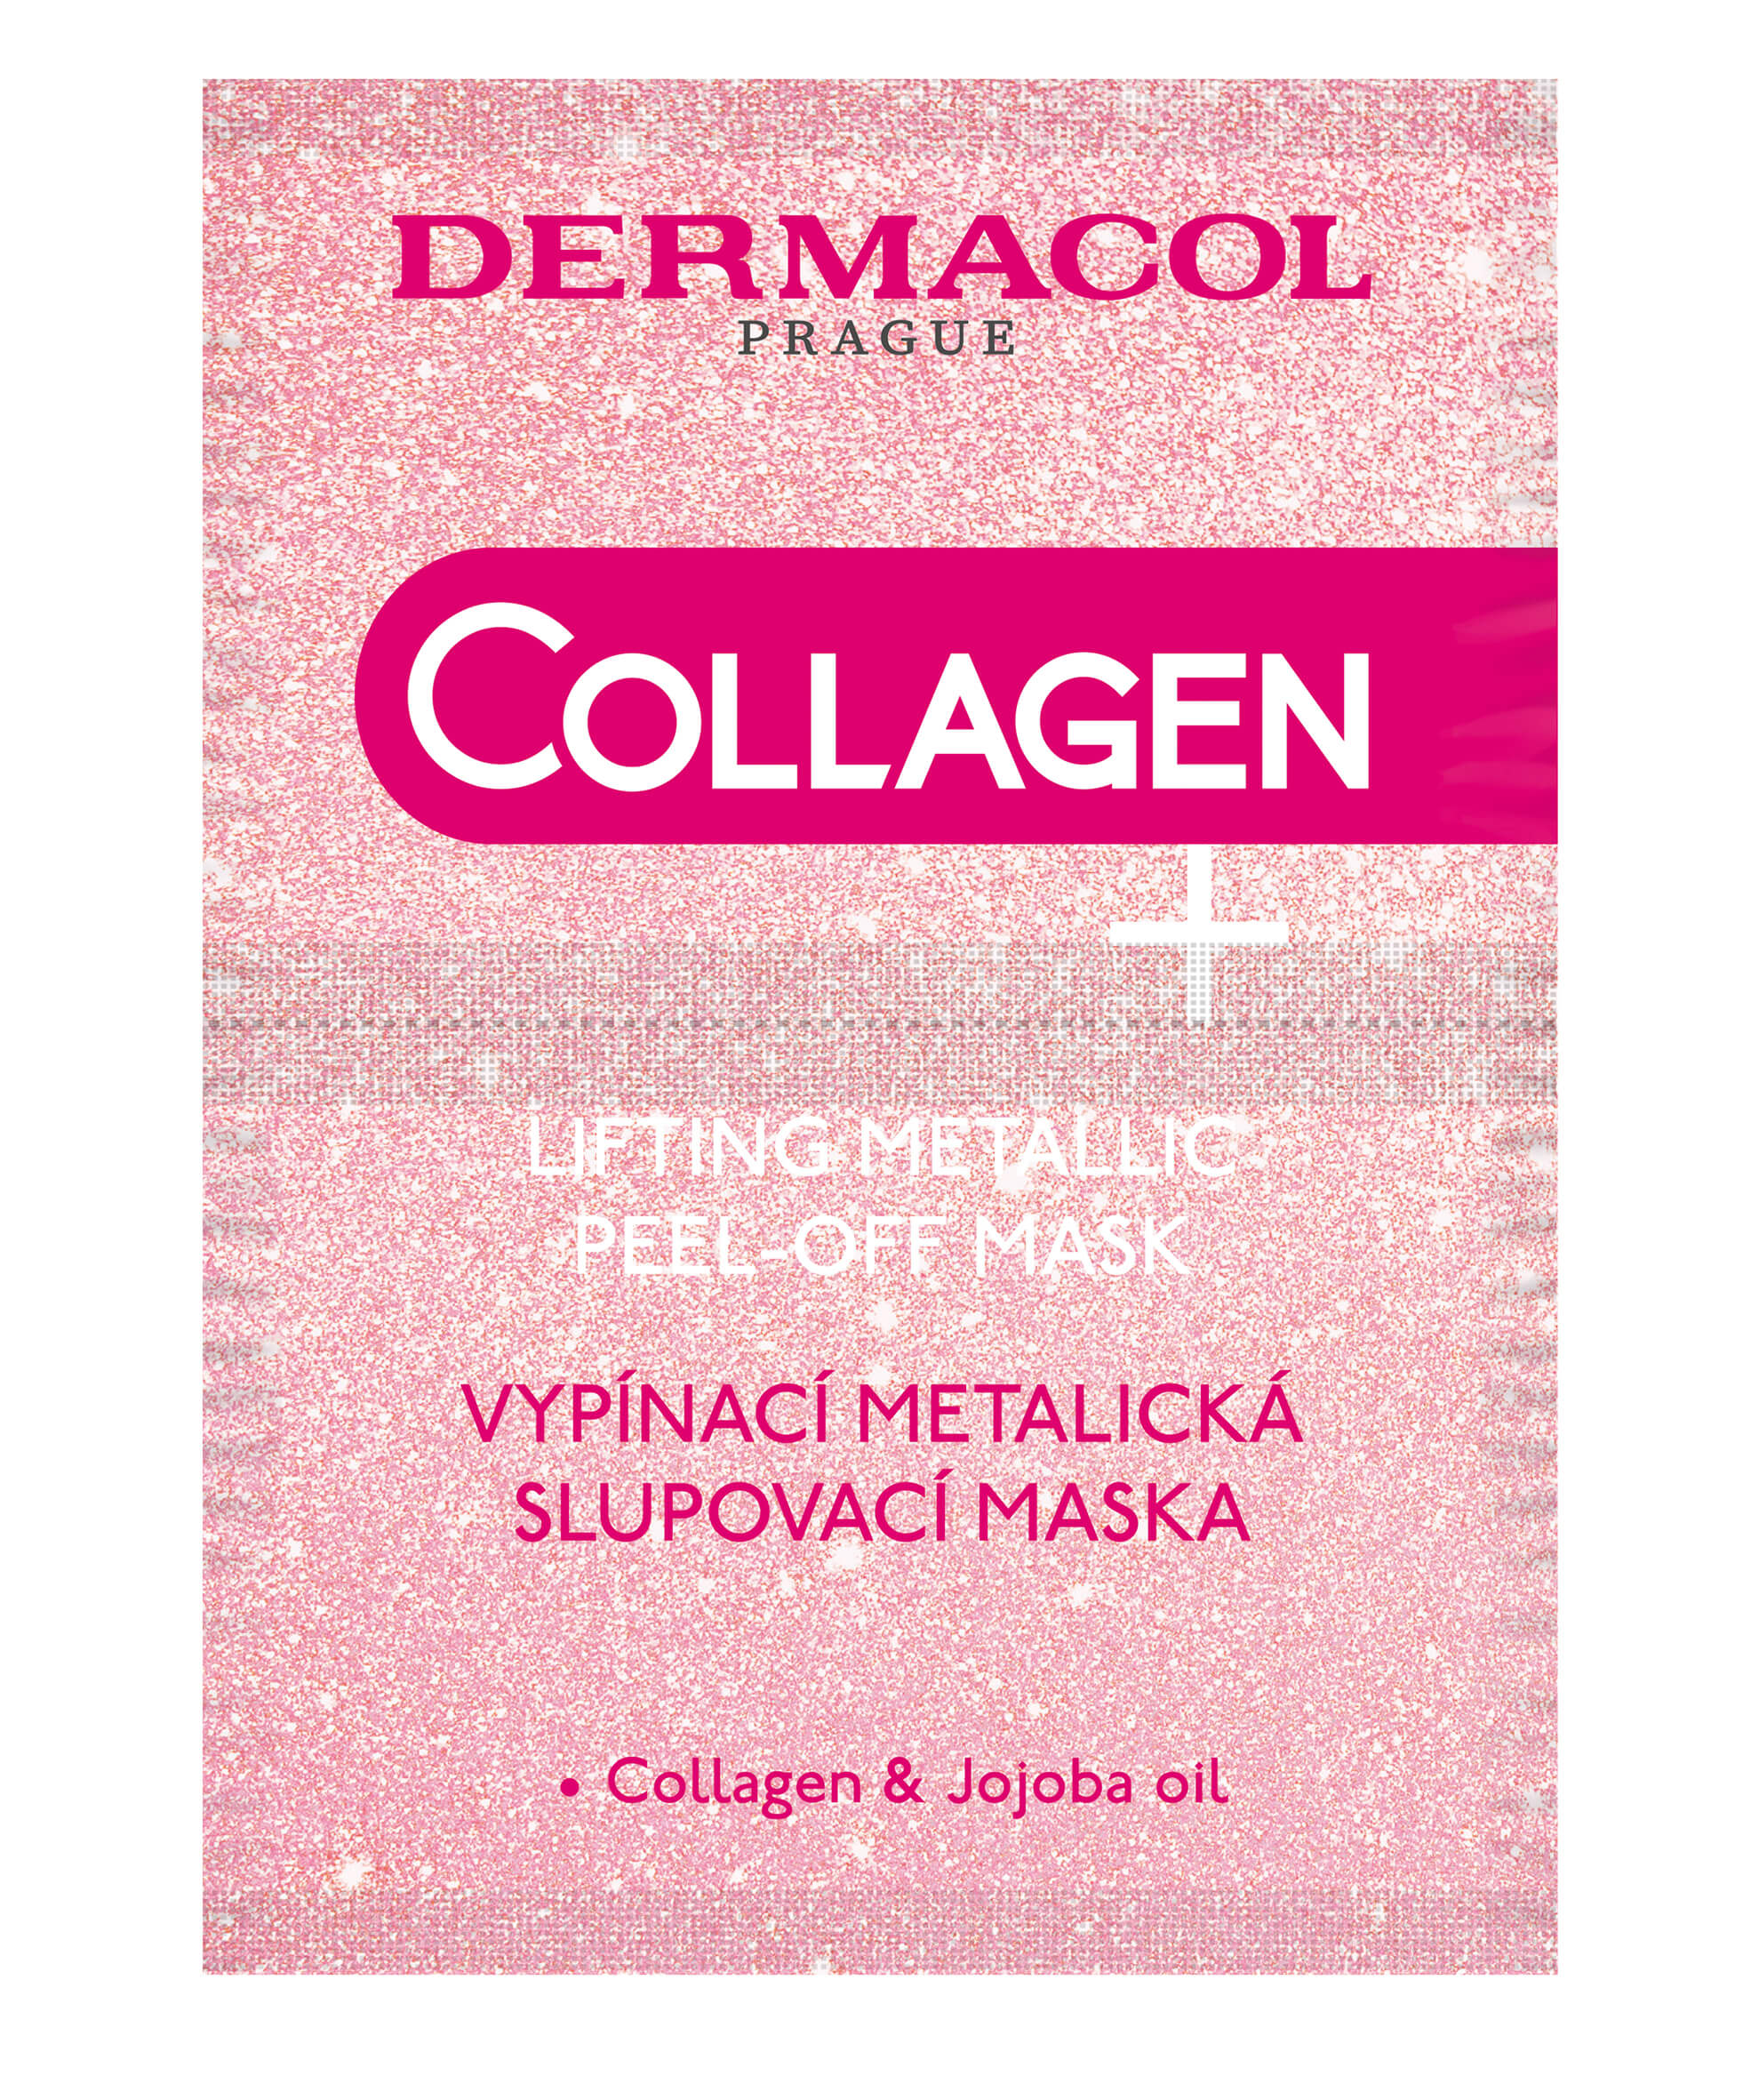 Dermacol Vypínací metalická slupovací maska s kolagenem Collagen Plus (Lifting Metallic Peel-Off Mask) 2 x 7, 5 ml